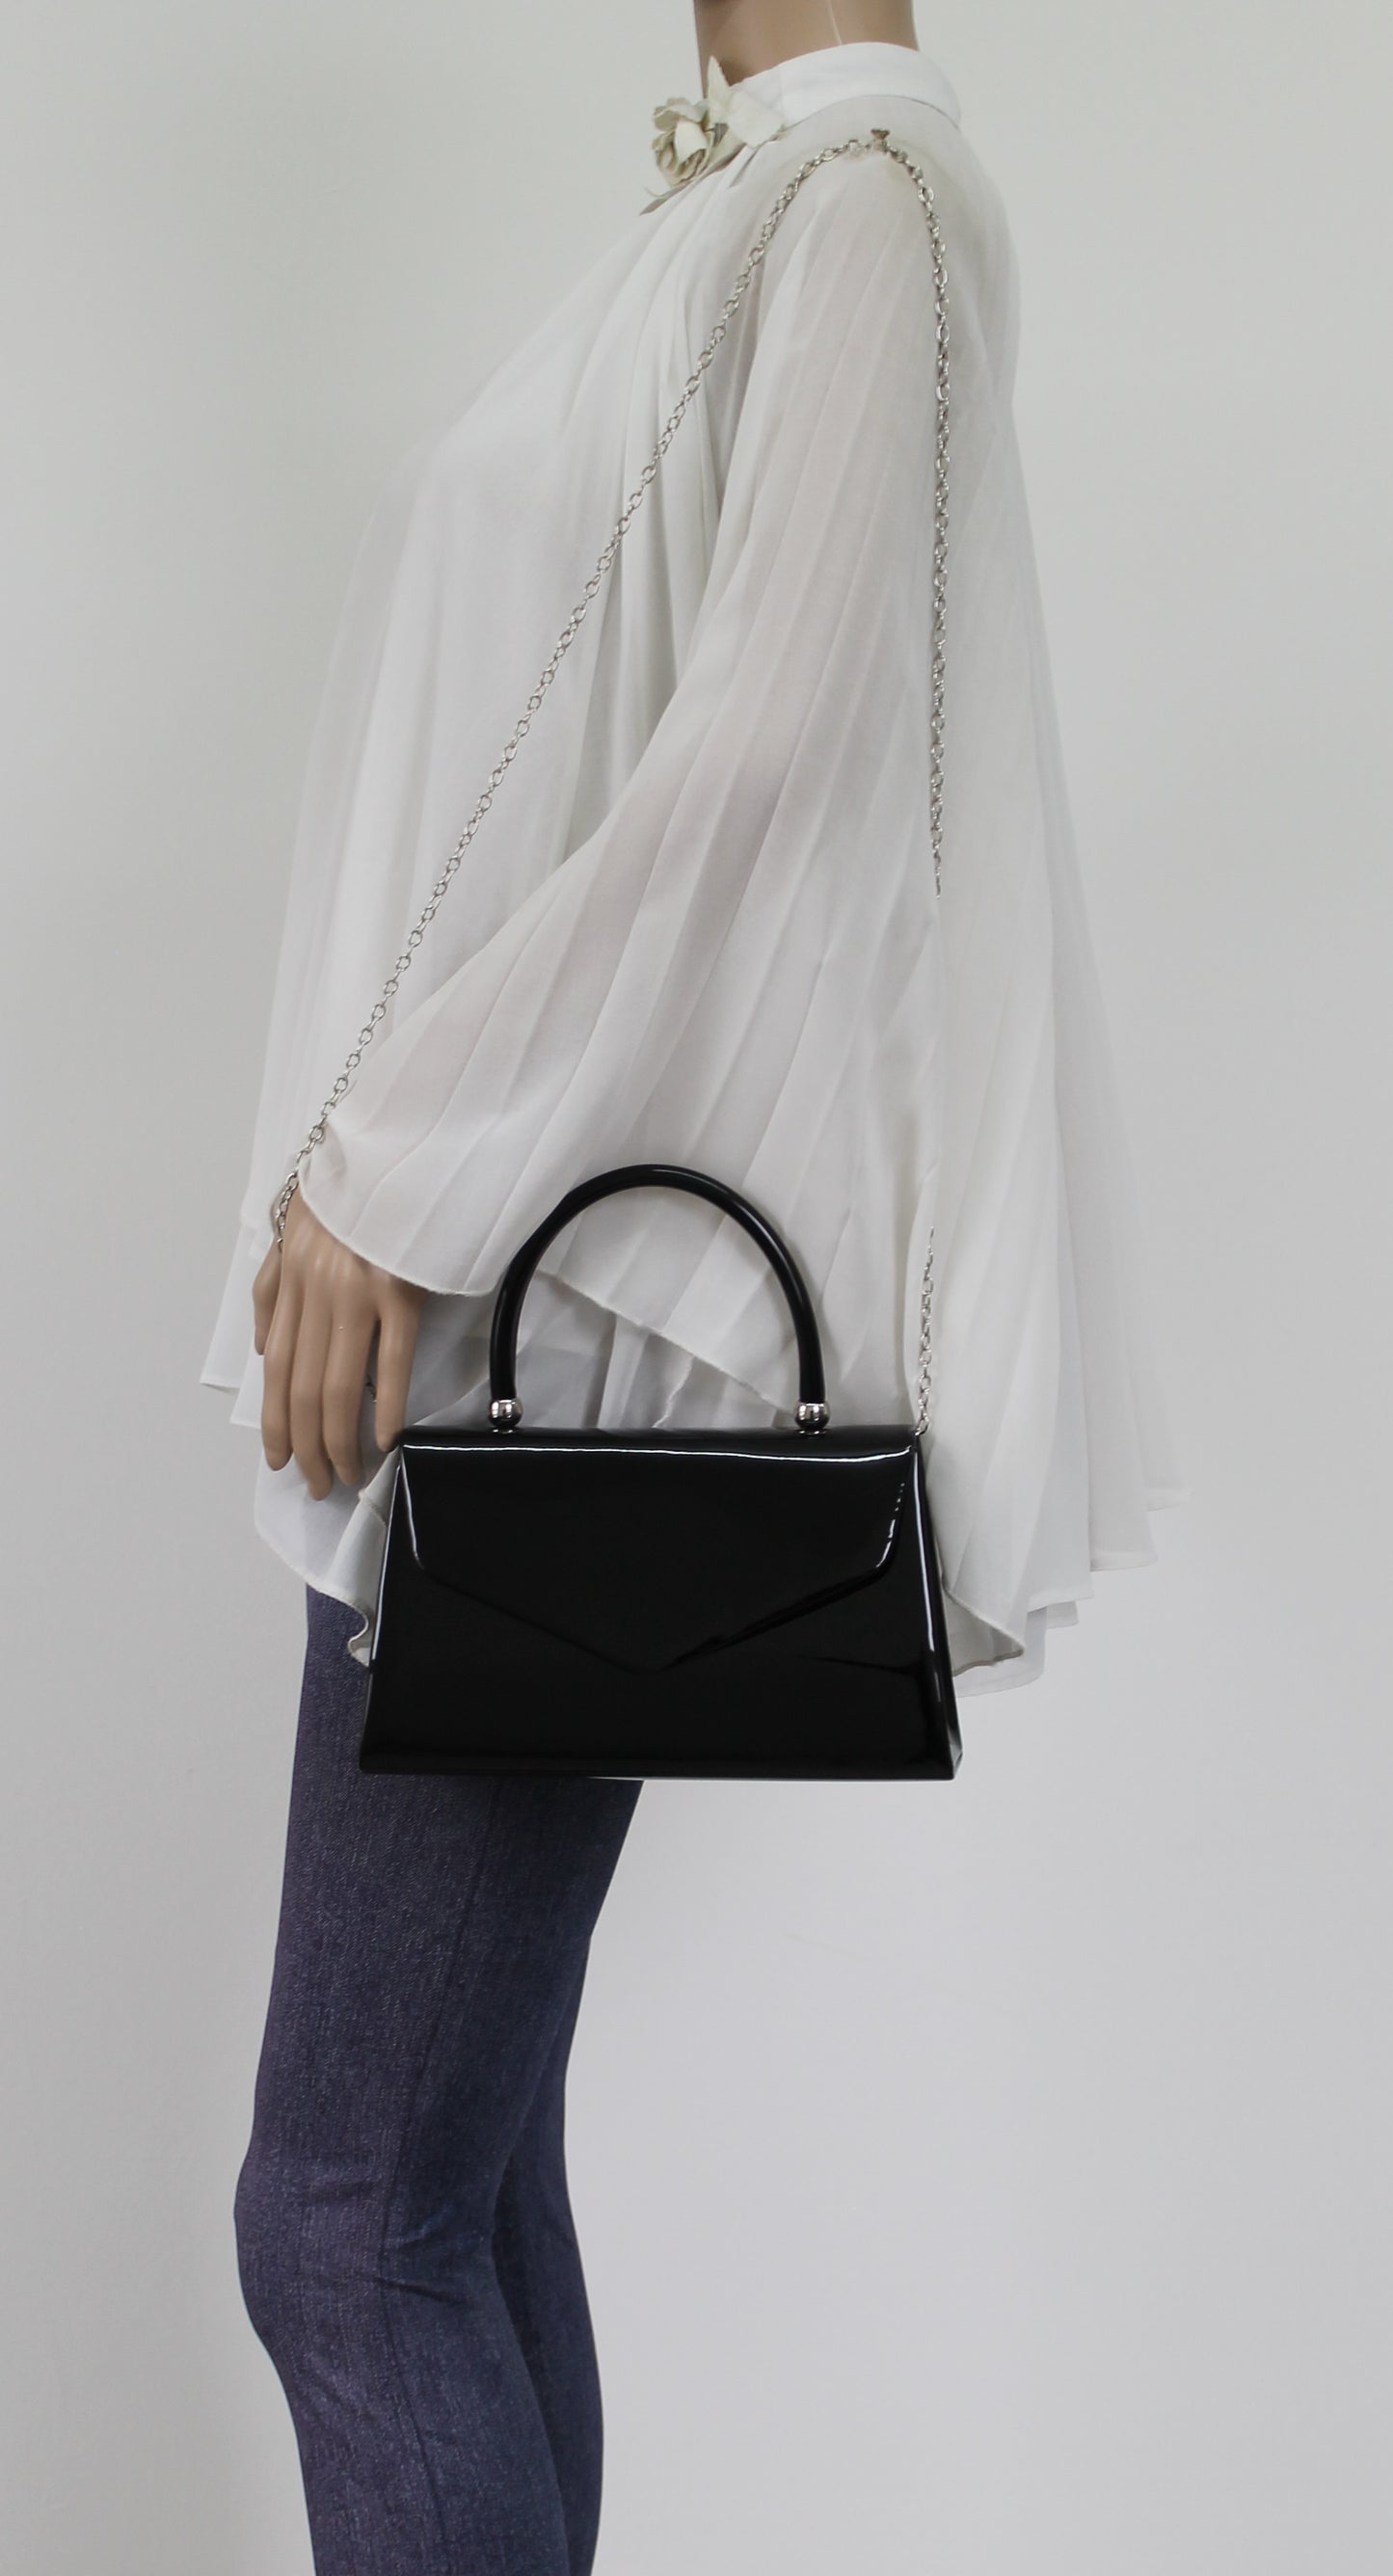 Zoey Patent Envelope Mini-Handbag Clutch Bag Black